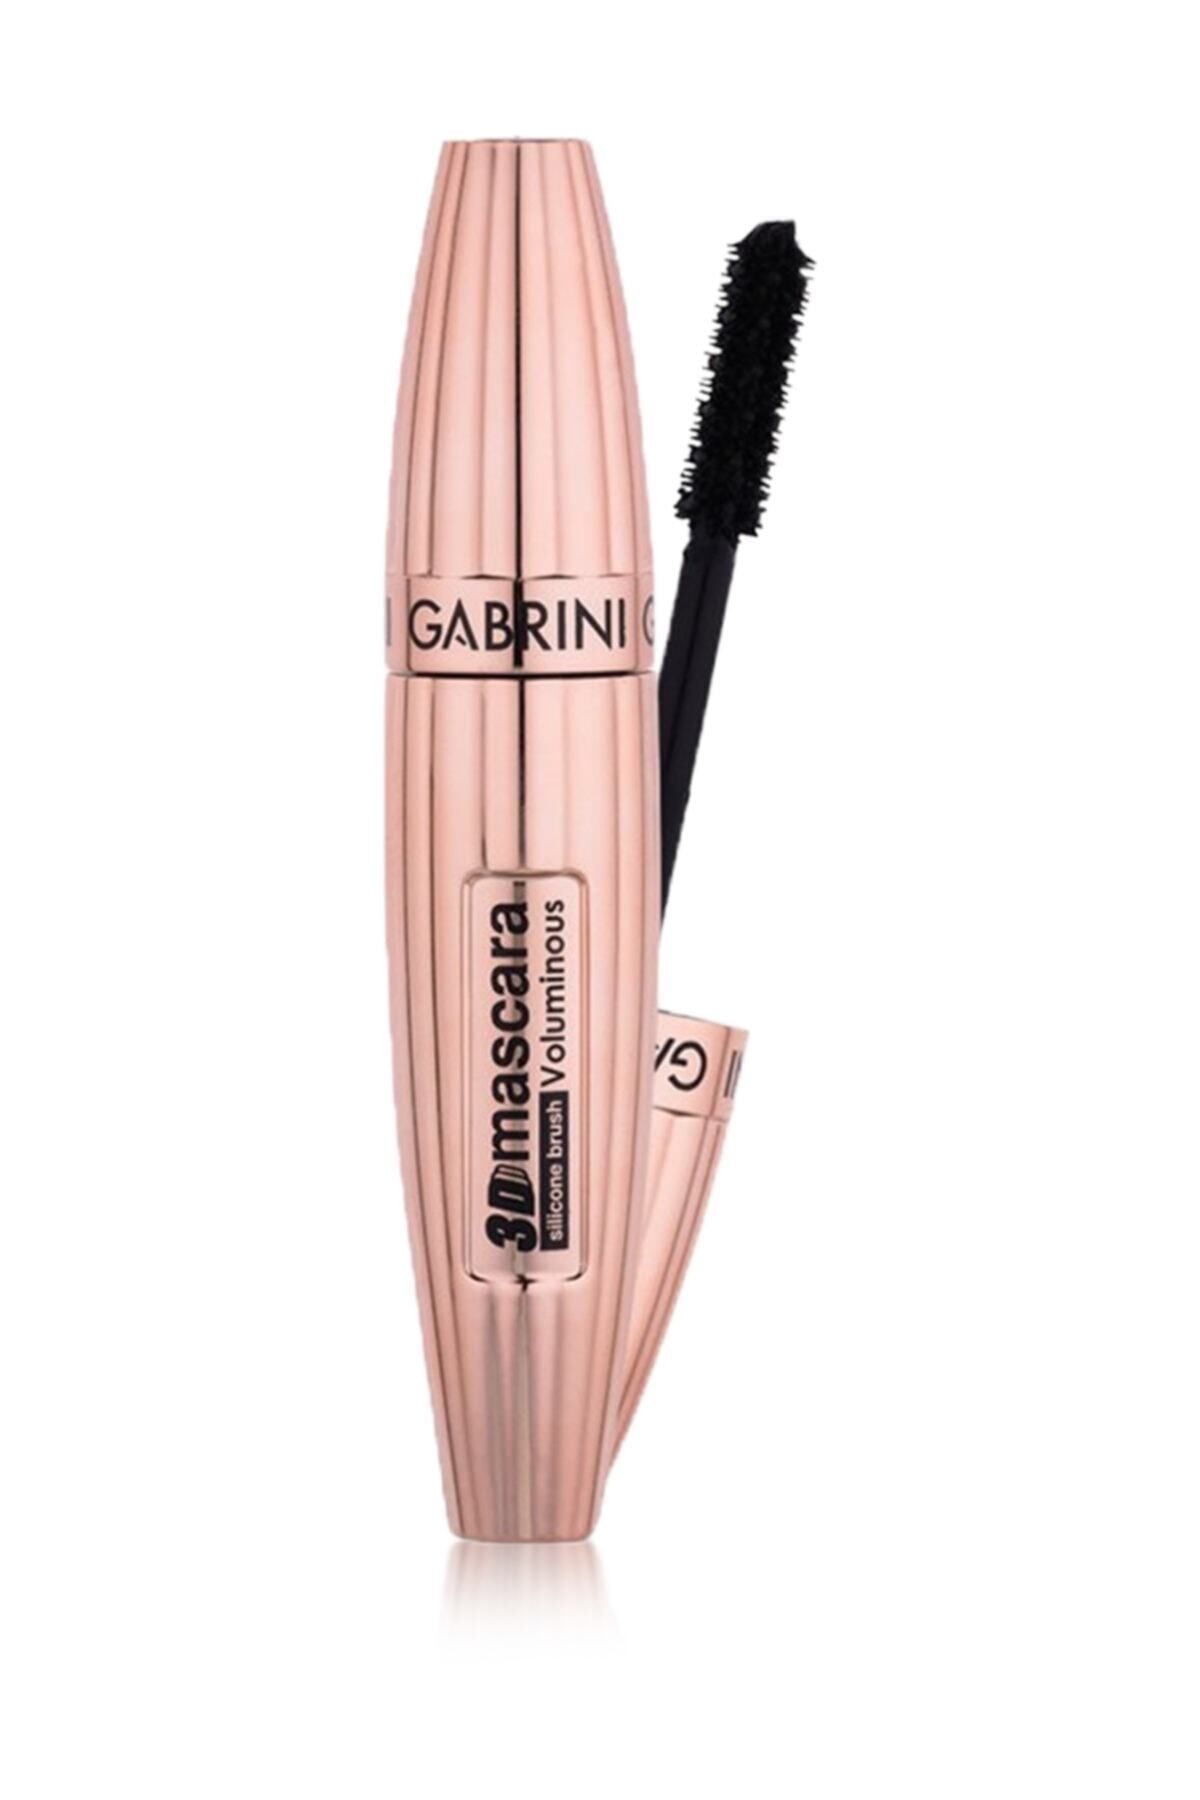 Gabrini 3d Silicon Brush Voluminous Mascara